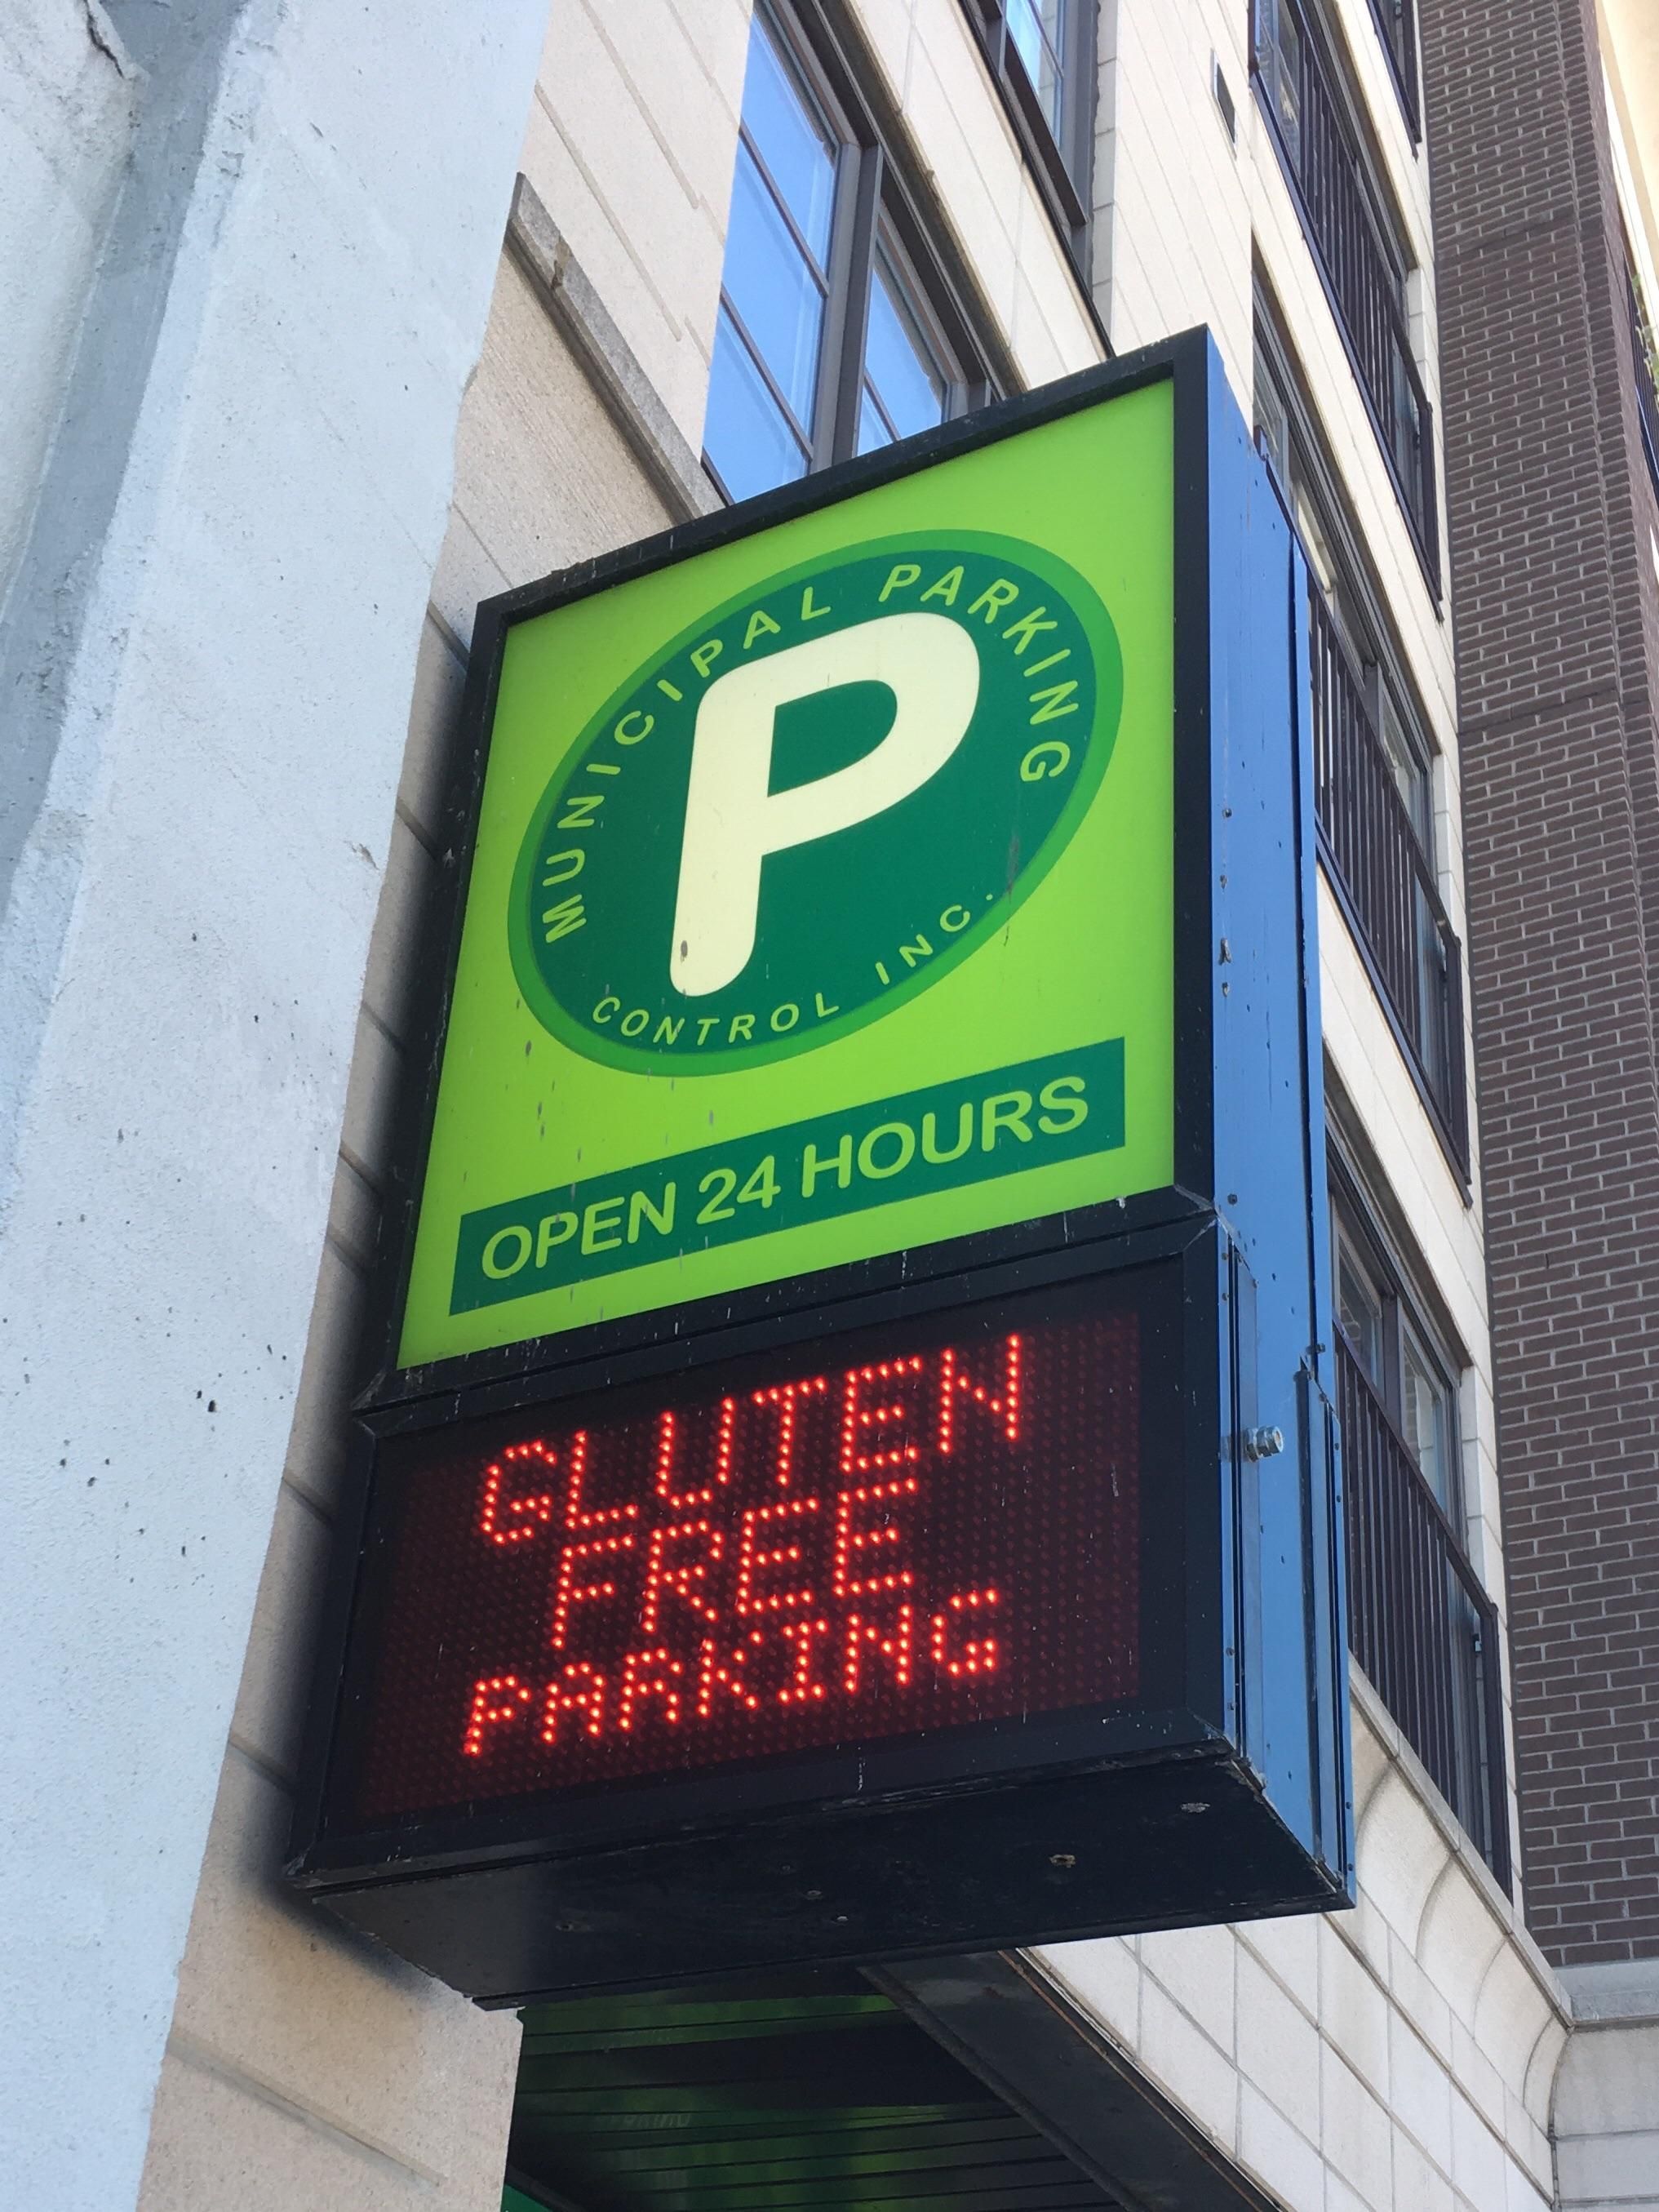 It’s so hard to find gluten free parking these days!